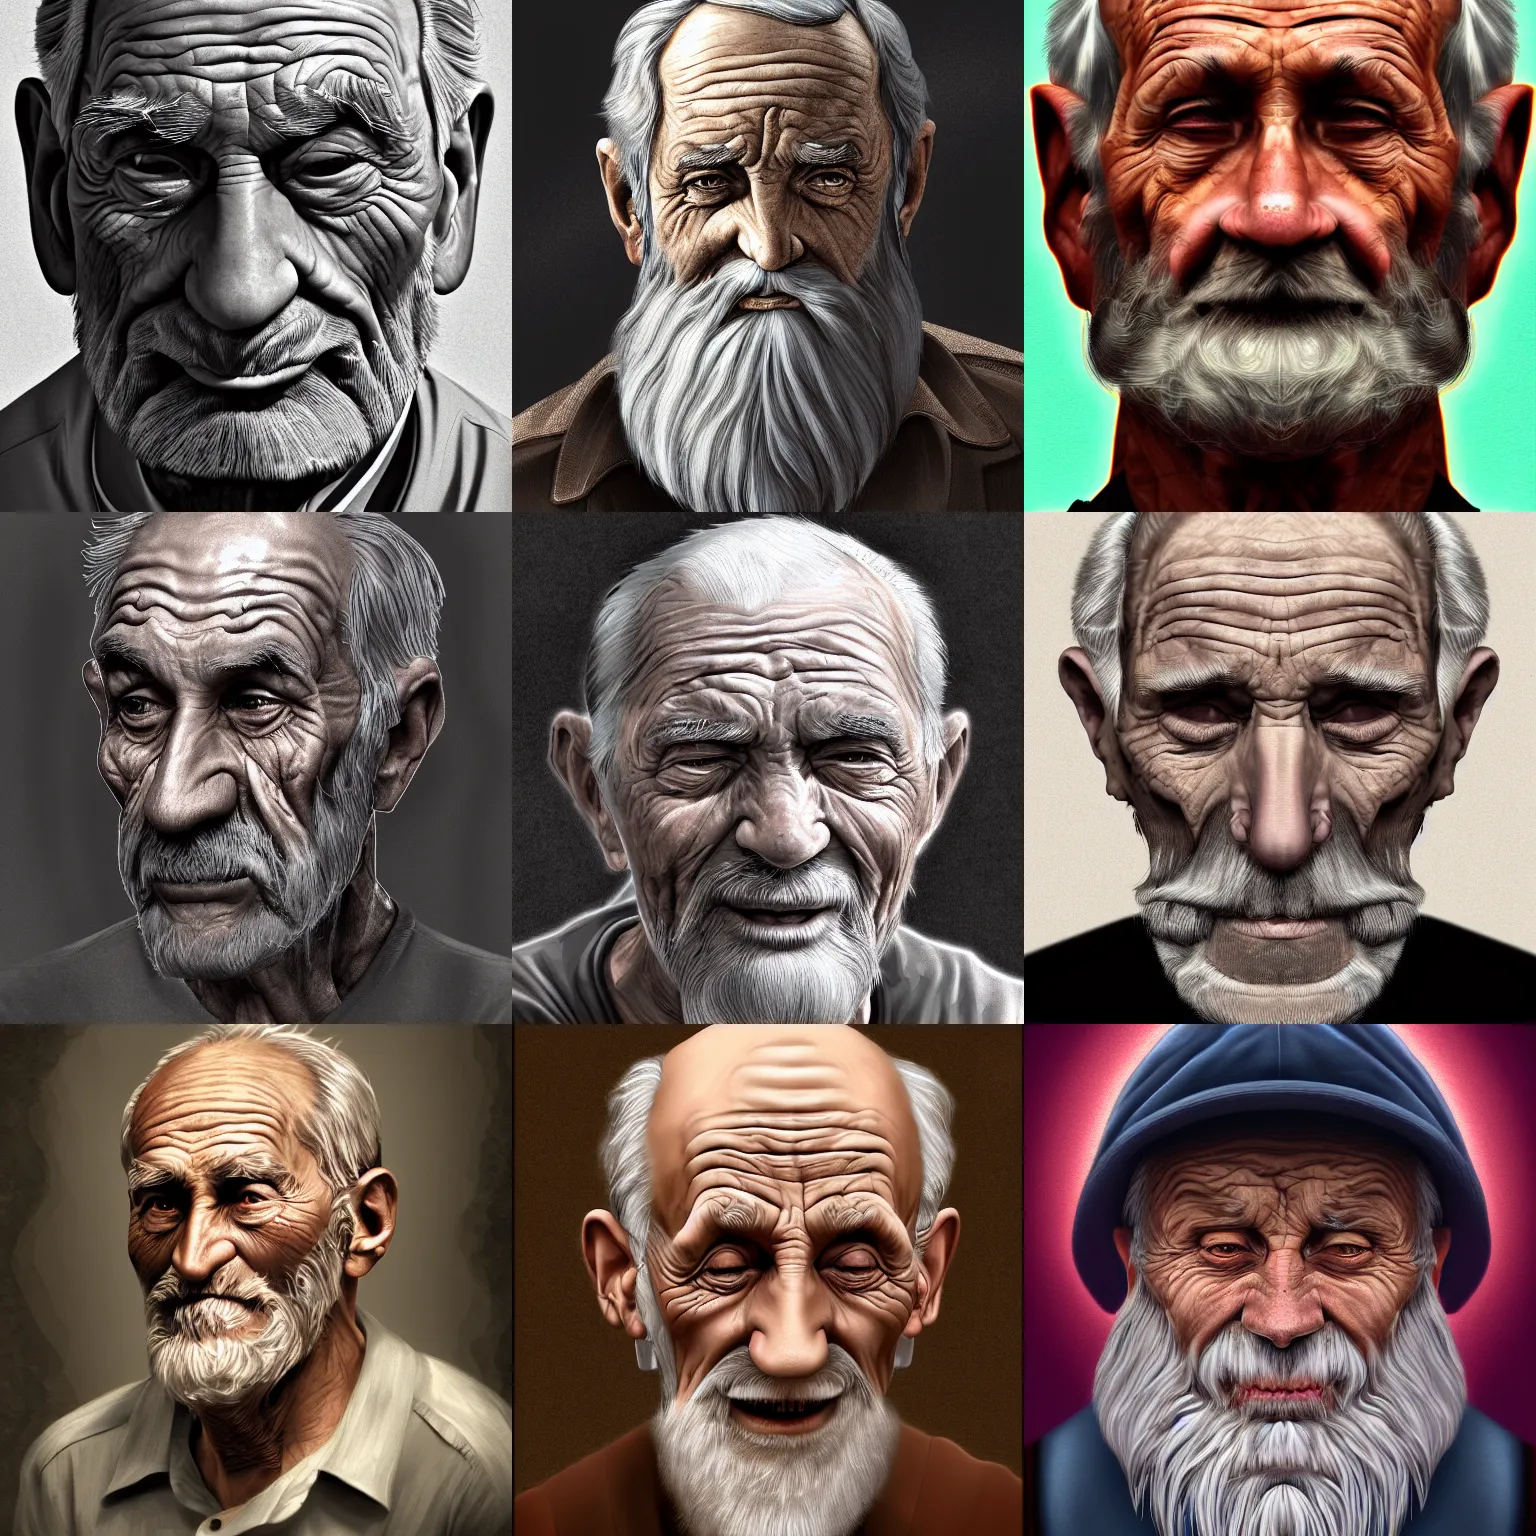 Prompt: Wrinkly old man, mighty looking, digital painting, lots of details, 4k